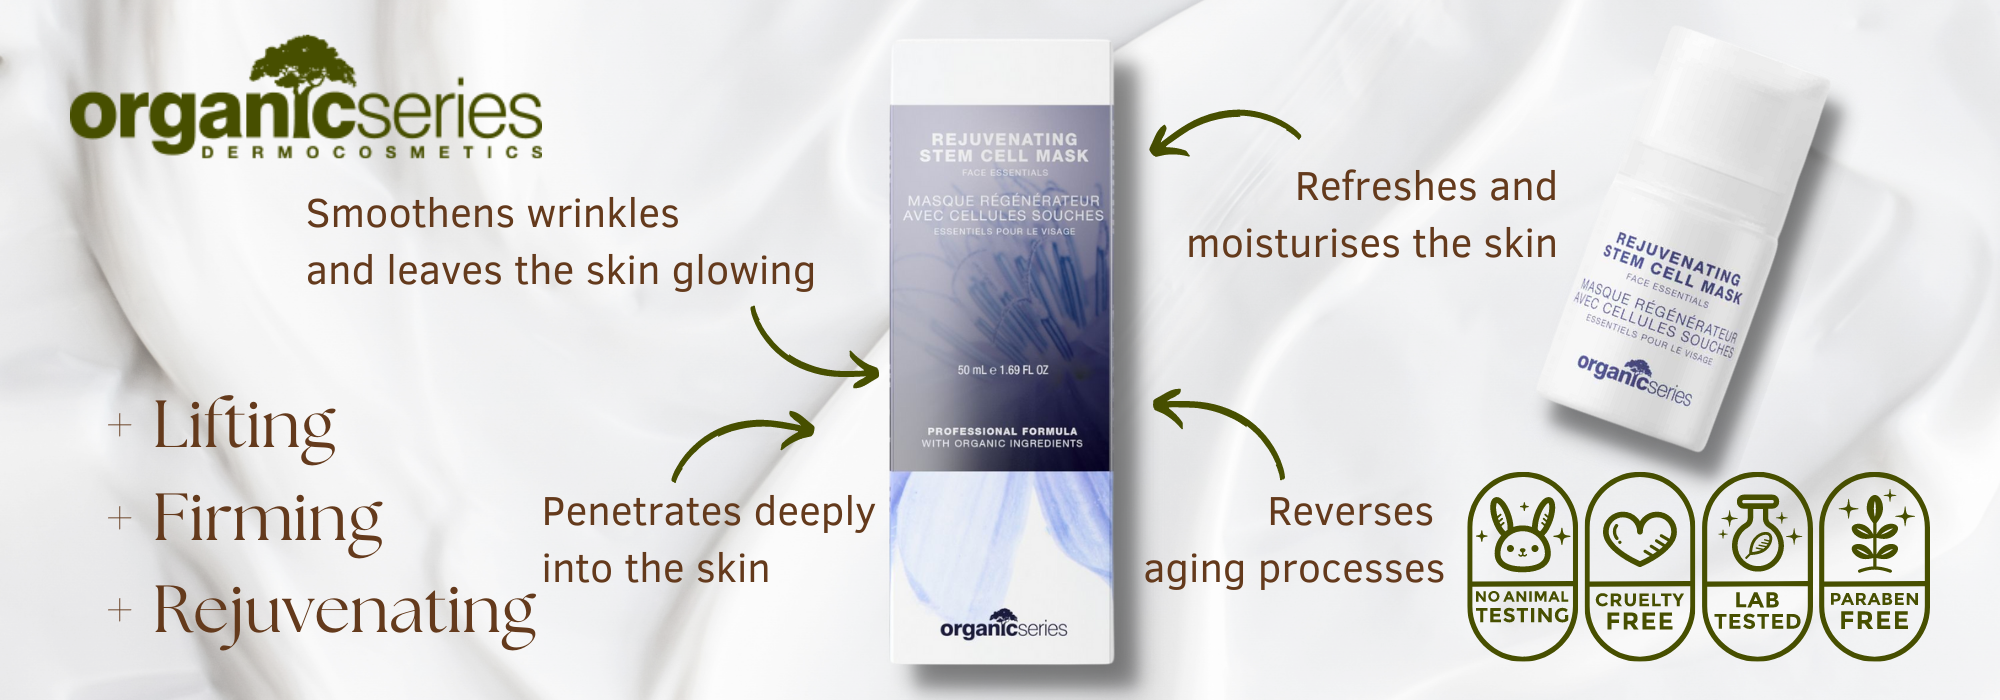 rejuvenating stem cell cream mask by organic series